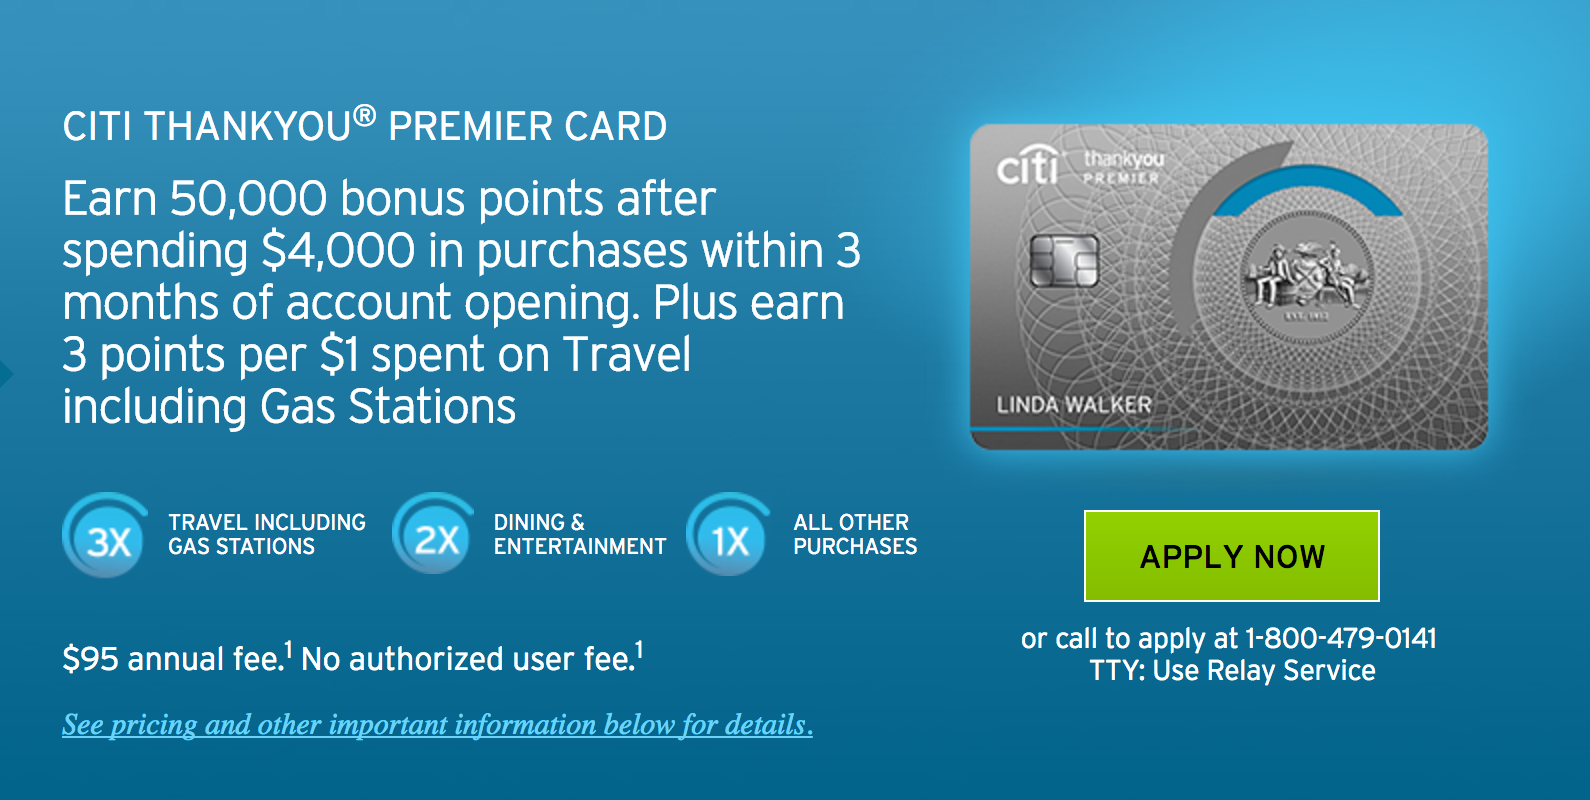 Citi® ThankYou® Premier Card 50K Sign-Up Bonus Now Available Online - UponArriving